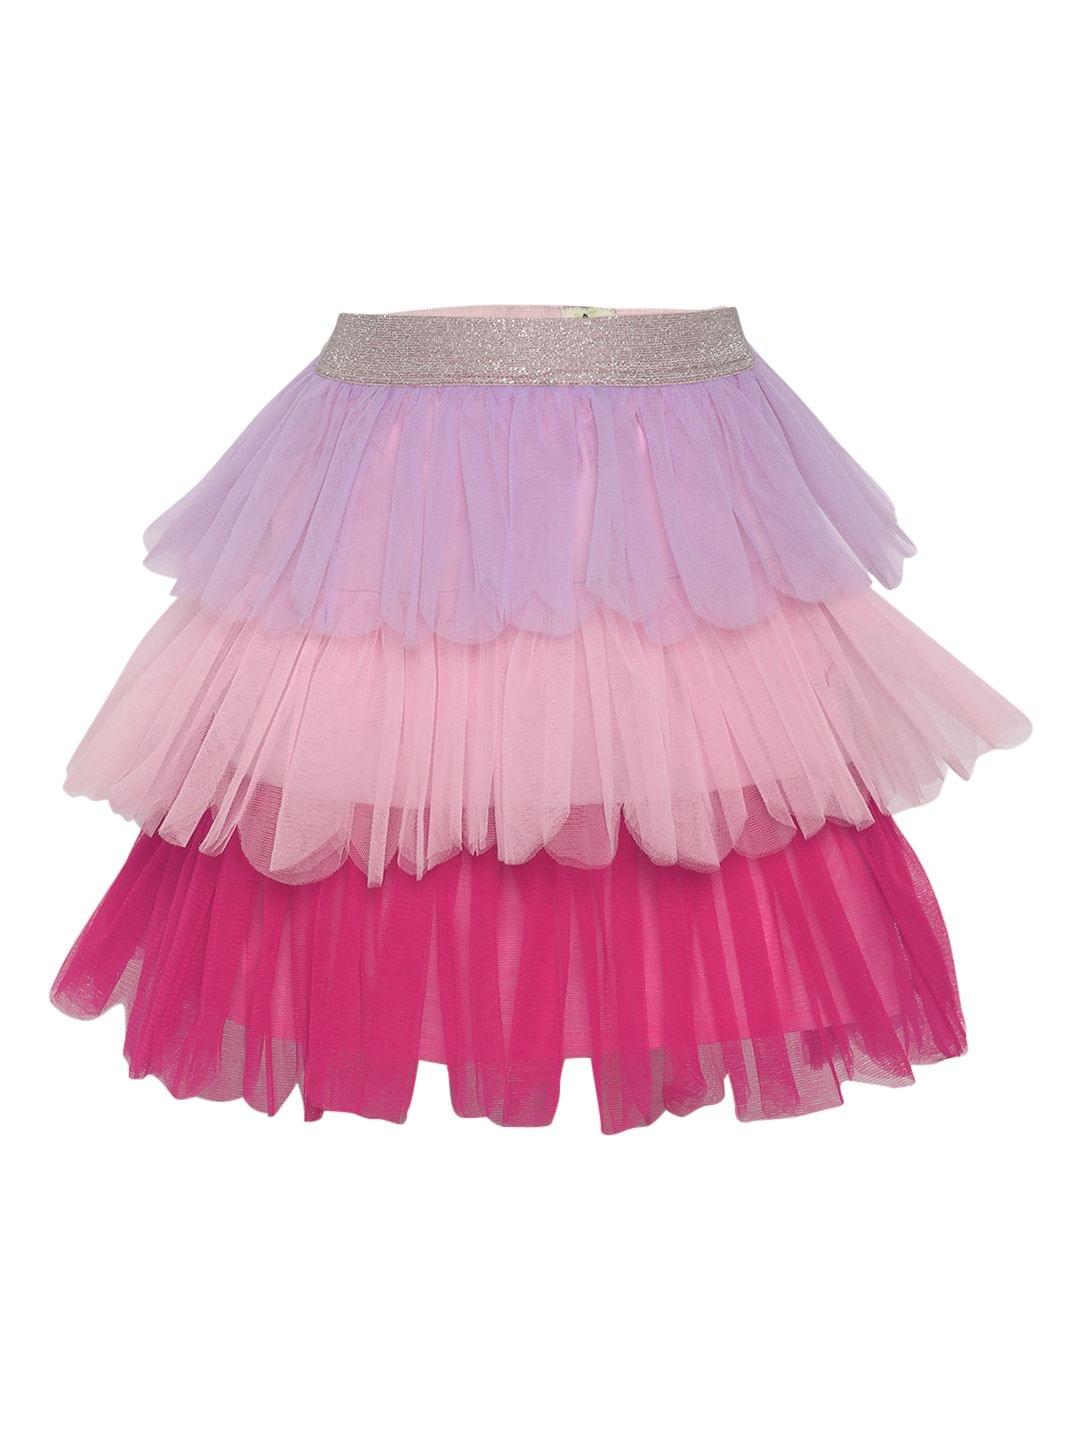 Pink Tier Tutu Skirt